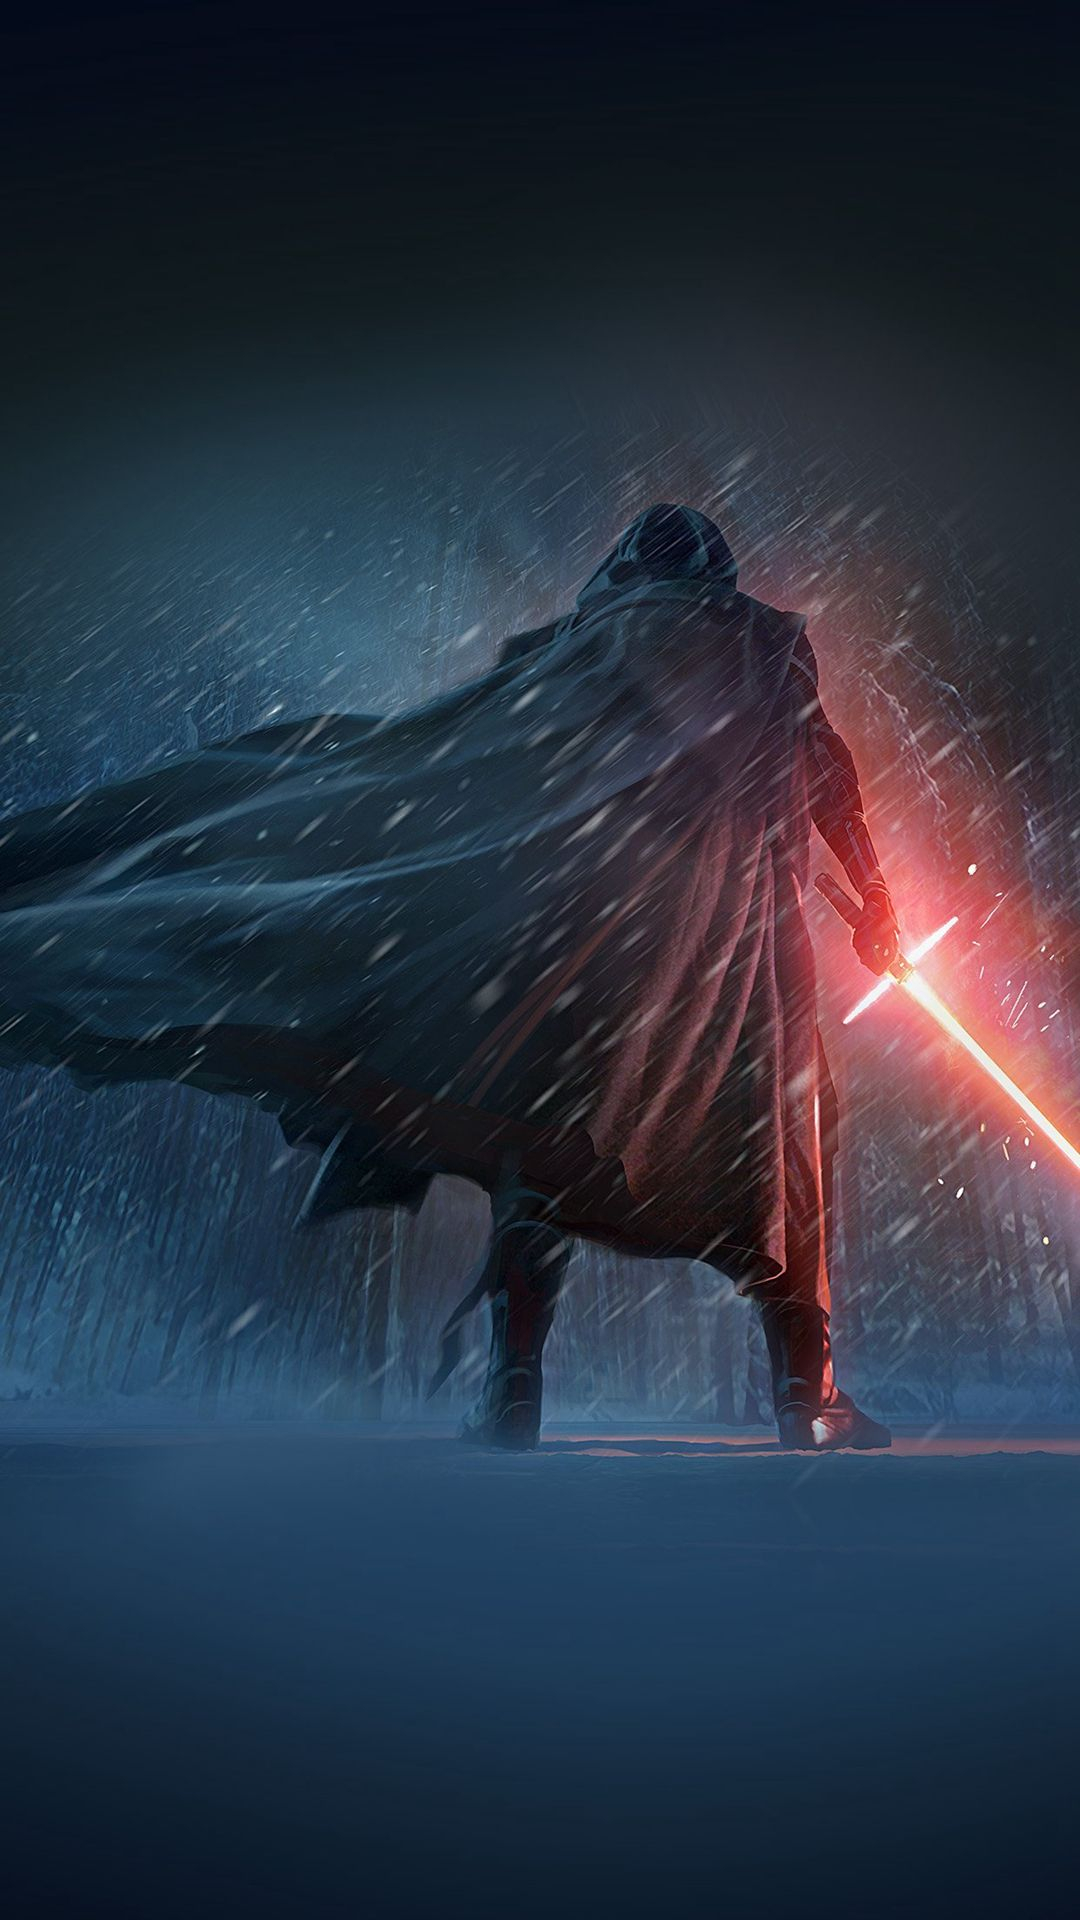 1080x1920 Darth Vader Starwars 7 Poster Film Art iPhone 8 Wallpapers | Force awakens art, Force awakens, Star wars episode vii